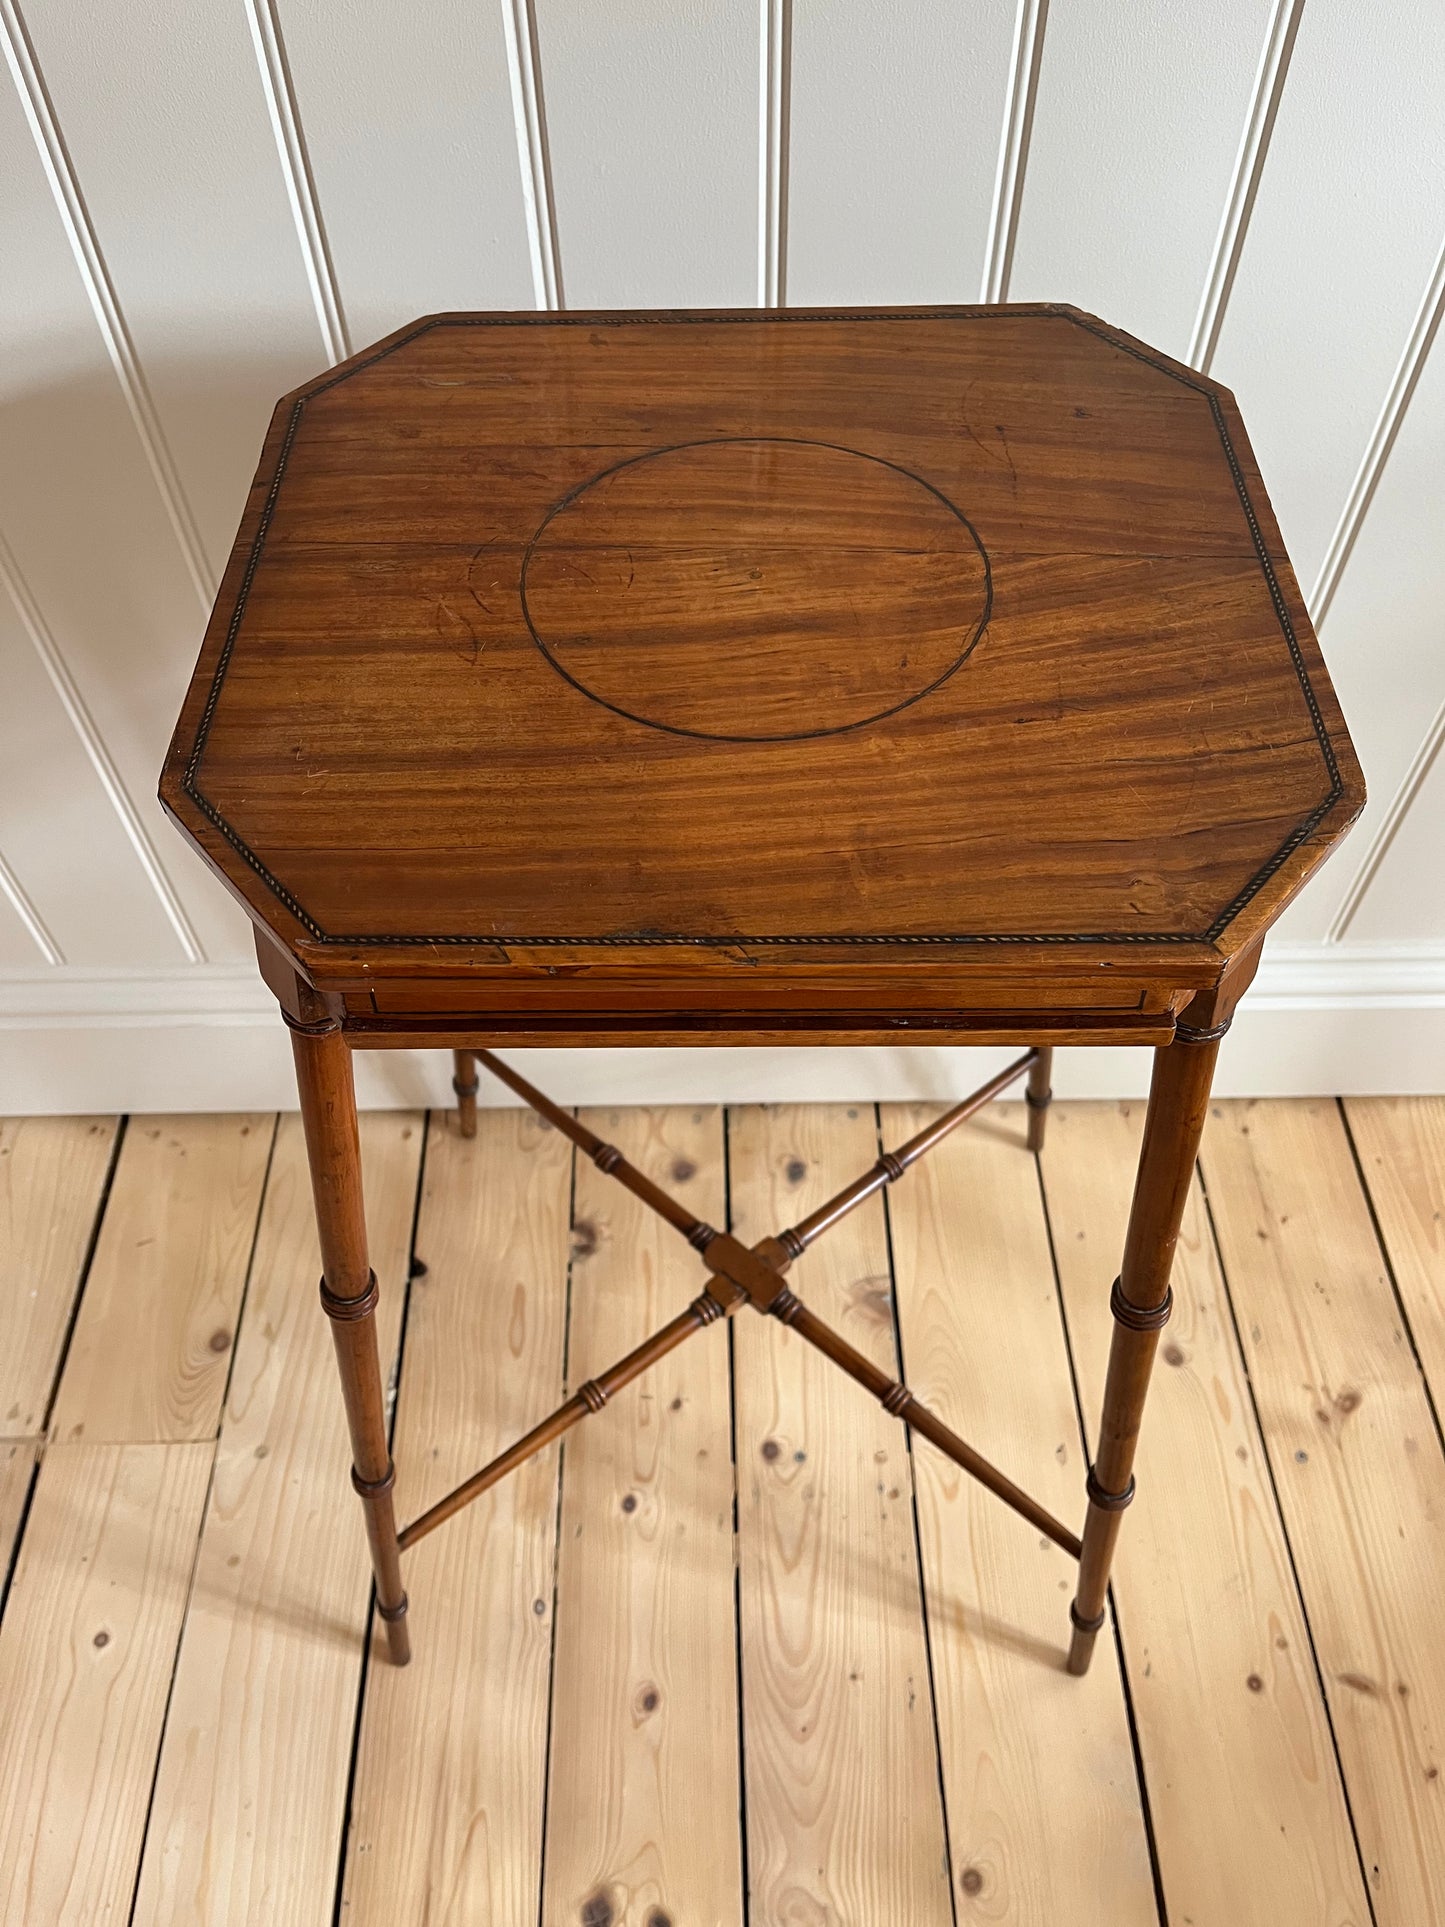 19th Century Satinwood table